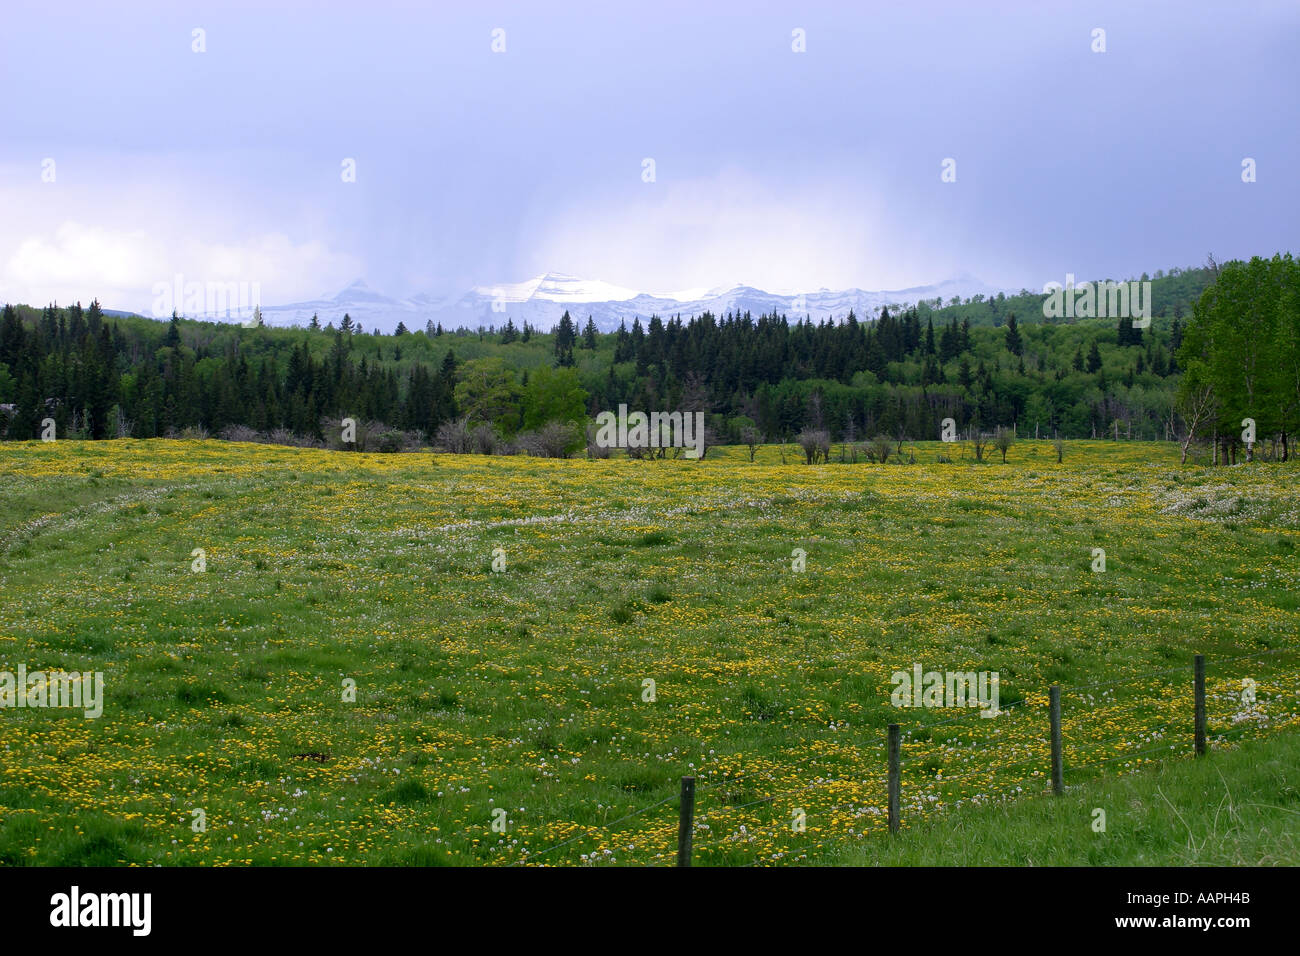 Livestock grazing in a field Stock Photo - Alamy